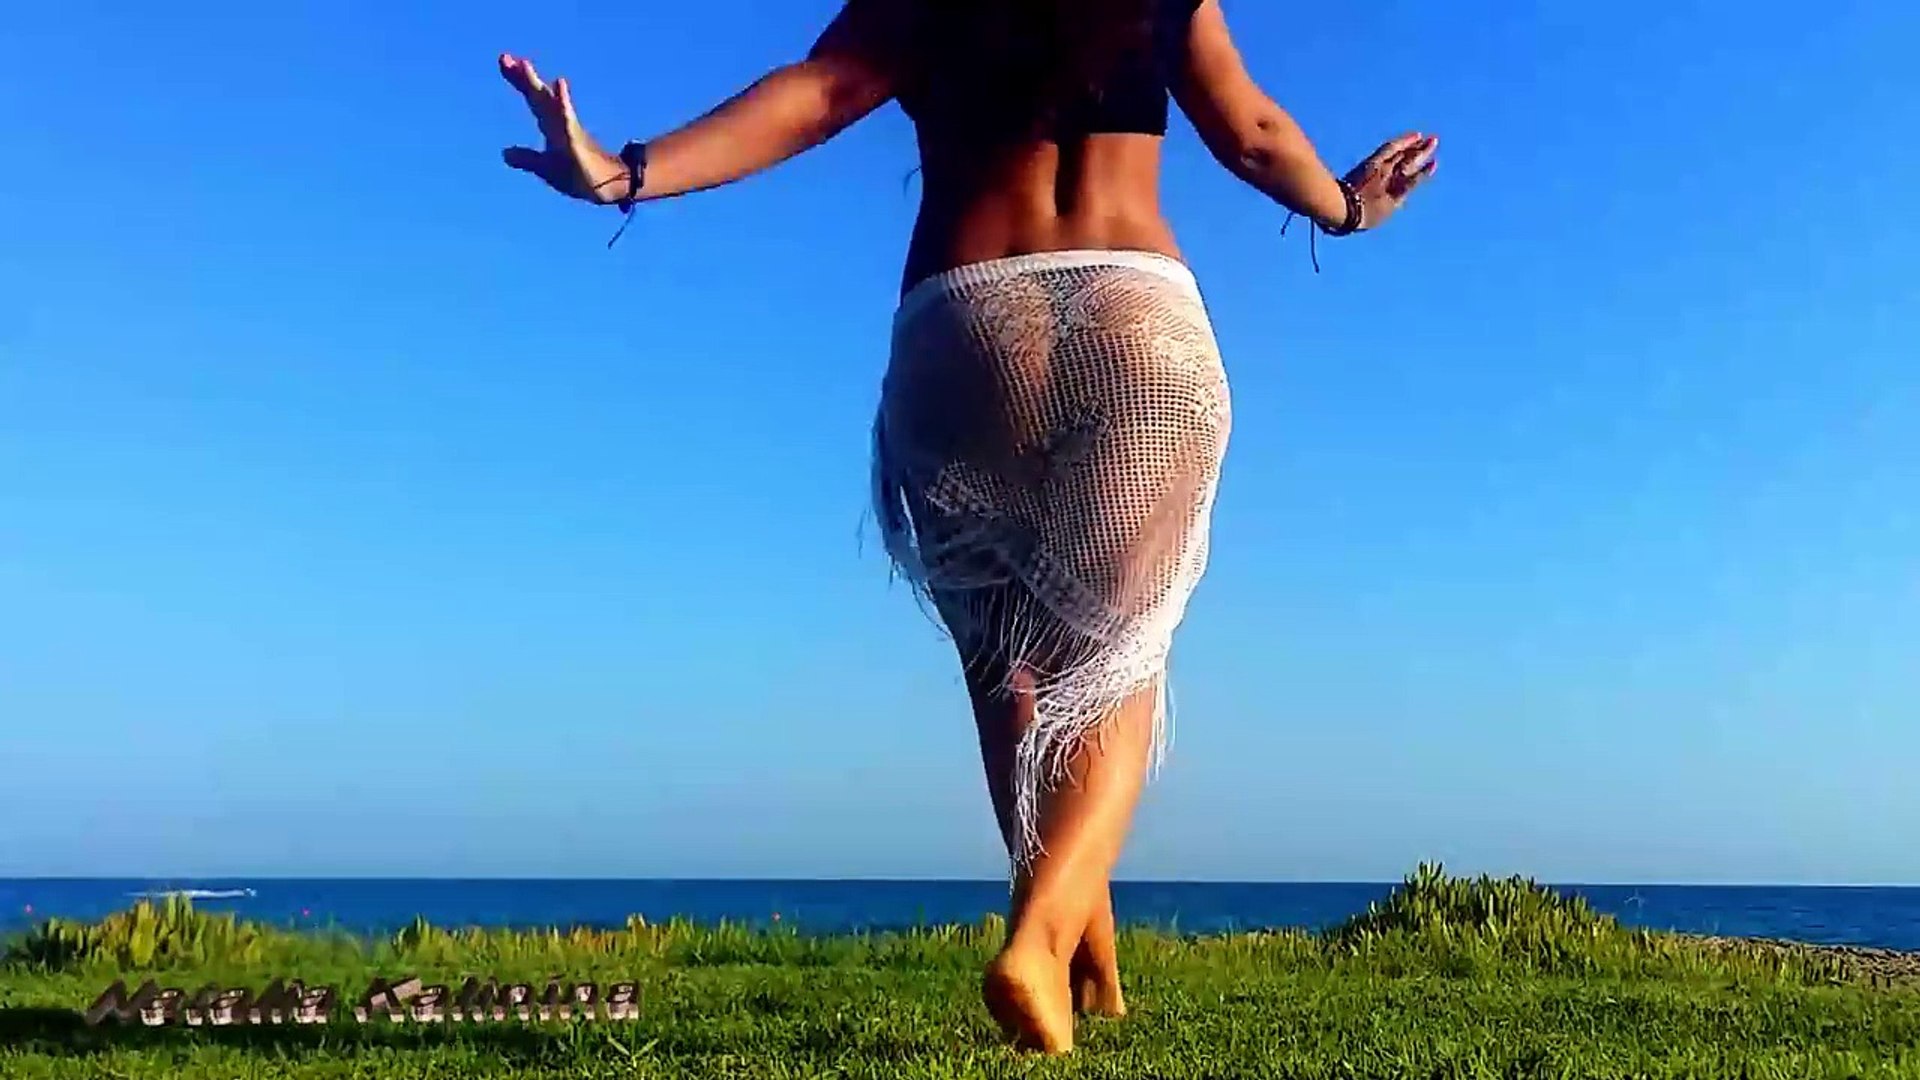 Natalia Kalinina dancing on the beach - video Dailymotion